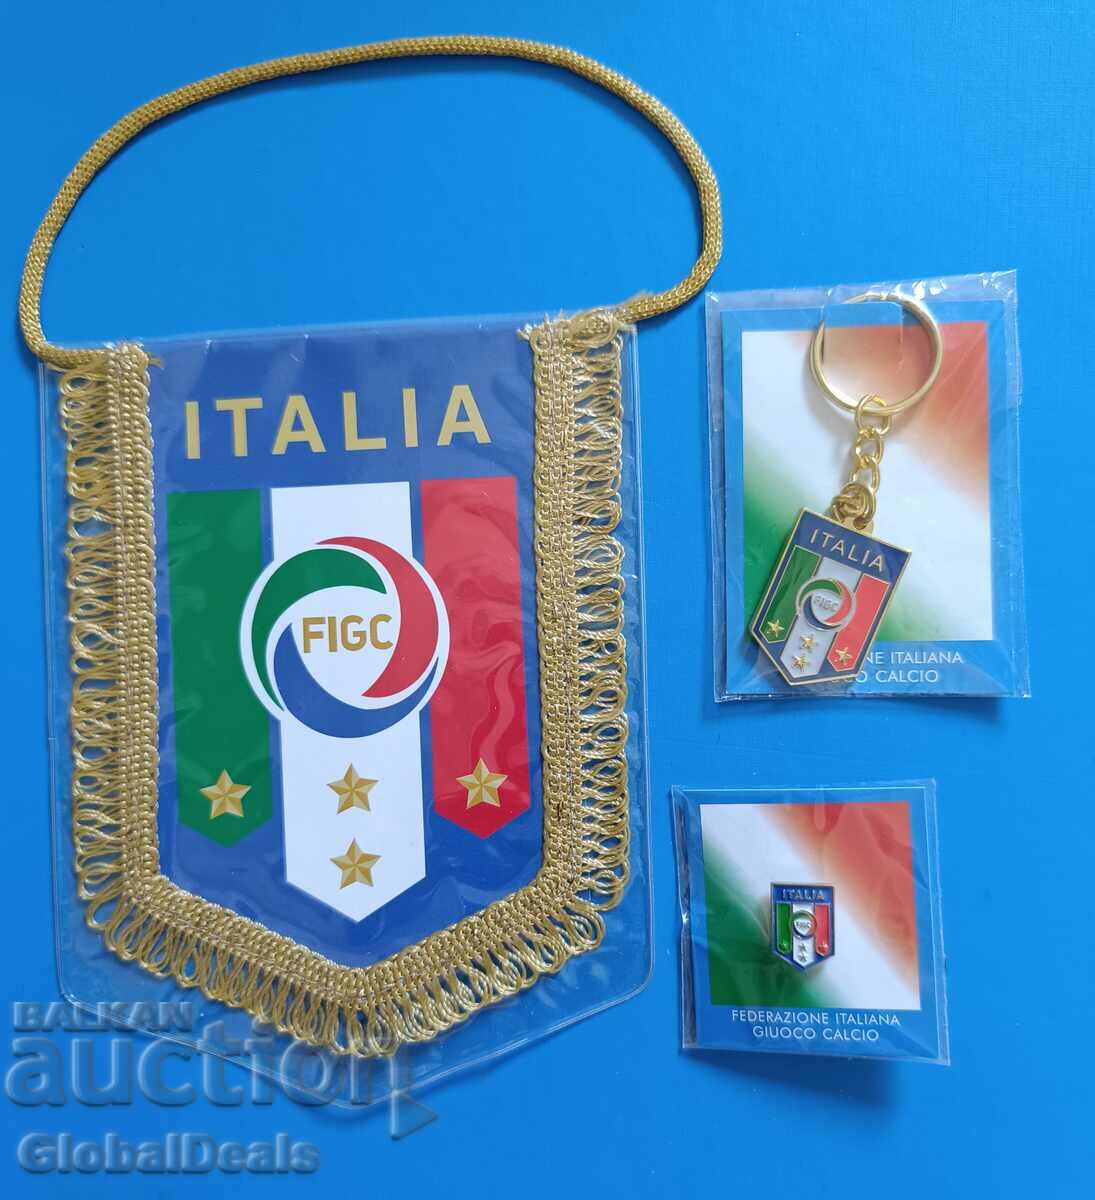 Bulgaria - Italy, badge, flag, key ring and program